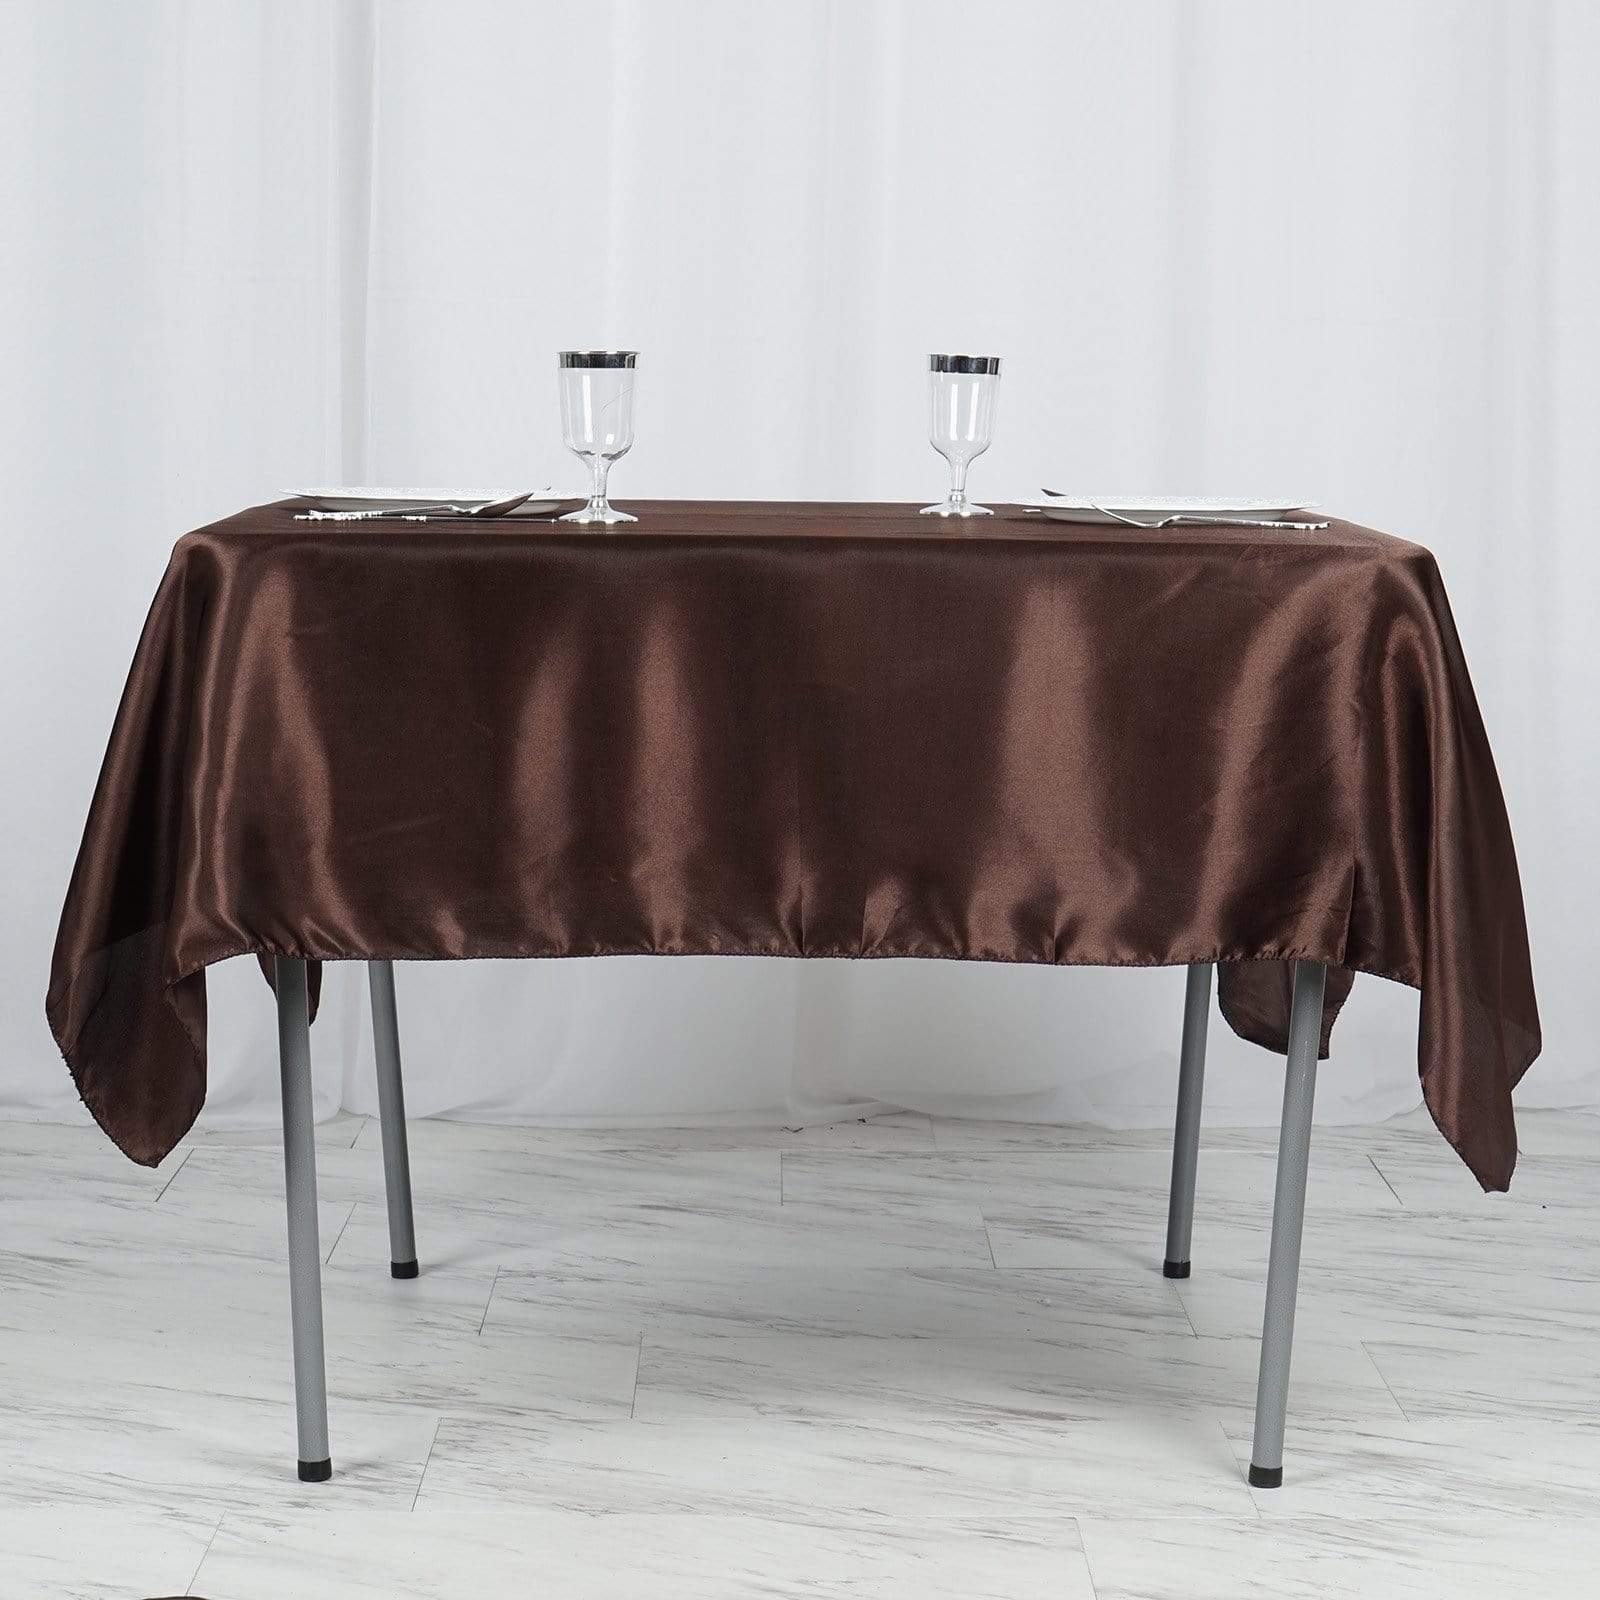 60-inch-square-satin-table-overlay-burnt-orange